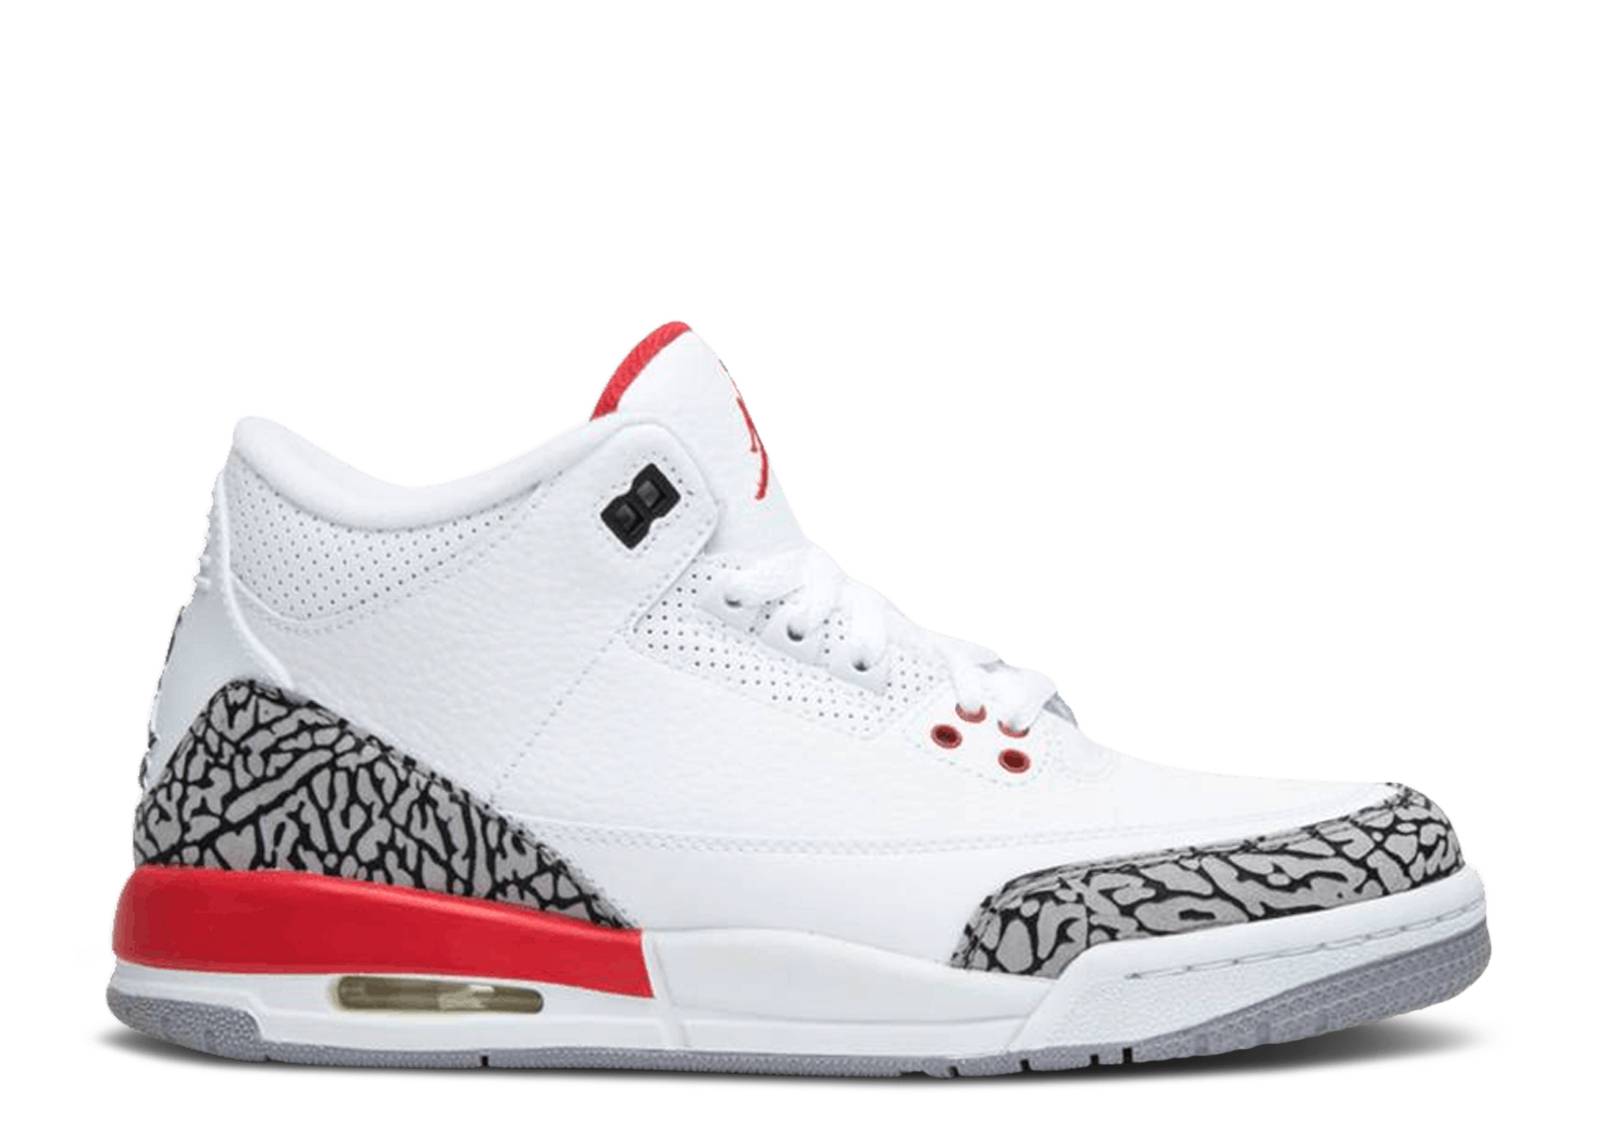 Sneaker Politics x Air Jordan 3 Retro GS 'Hall of Fame'